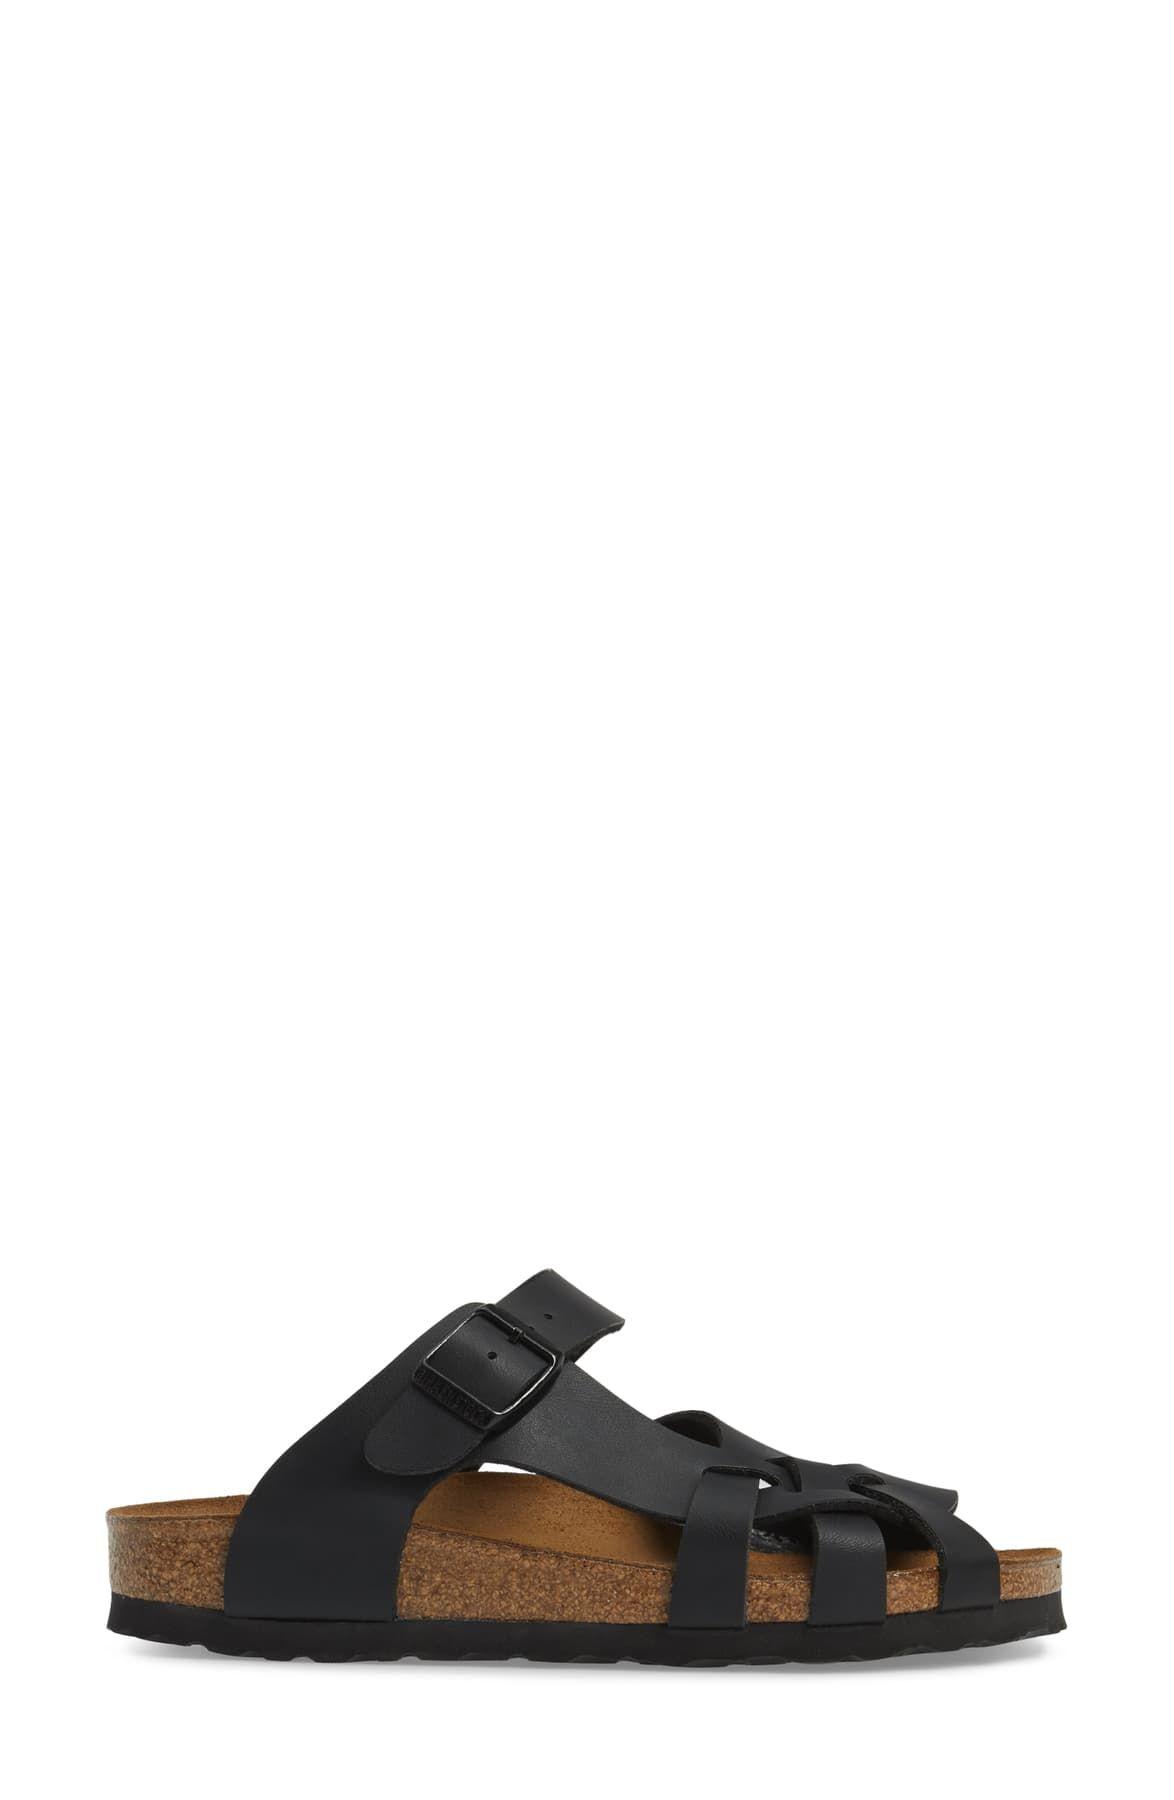 Birkenstock Pisa Sandal - Narrow Width - Discontinued in Black | Lyst